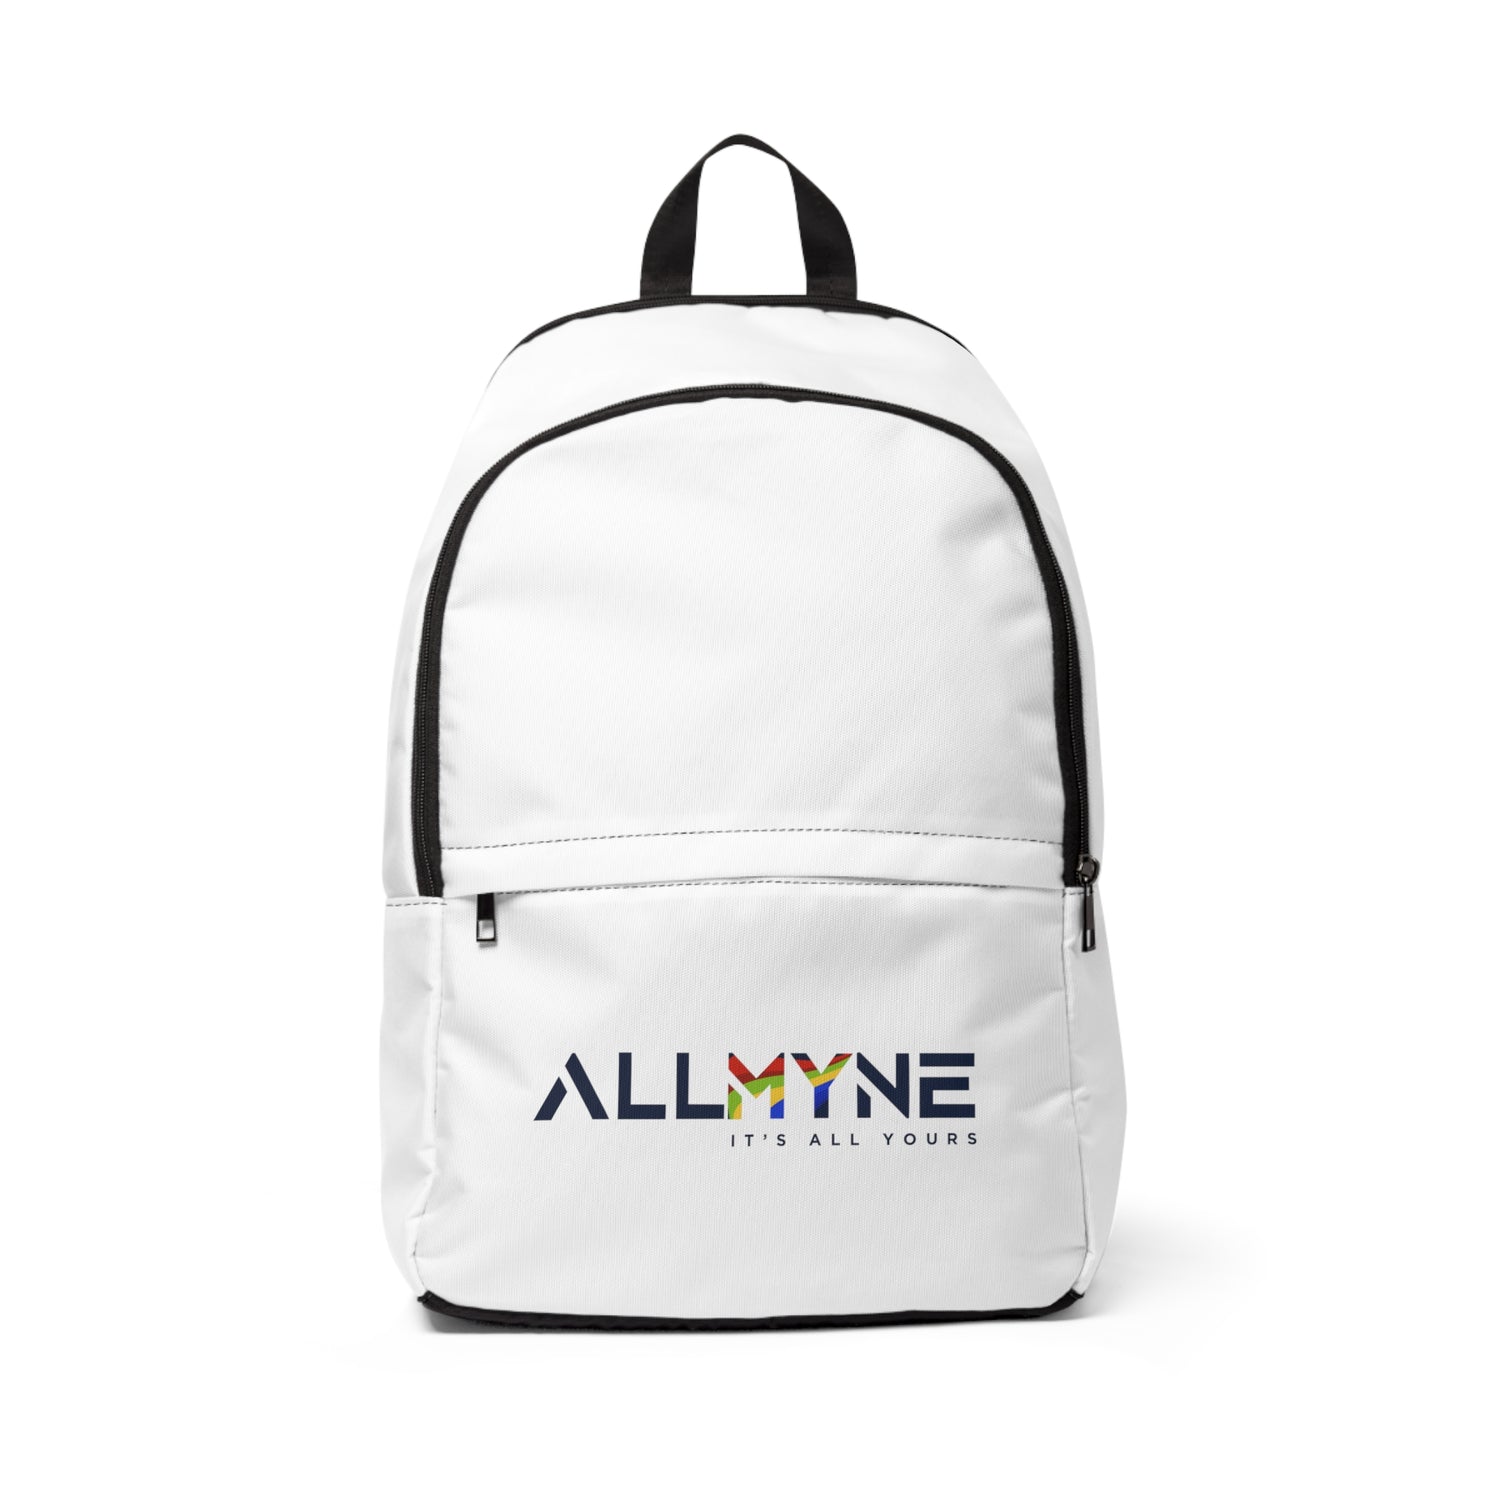 ALLMYNE Backpack